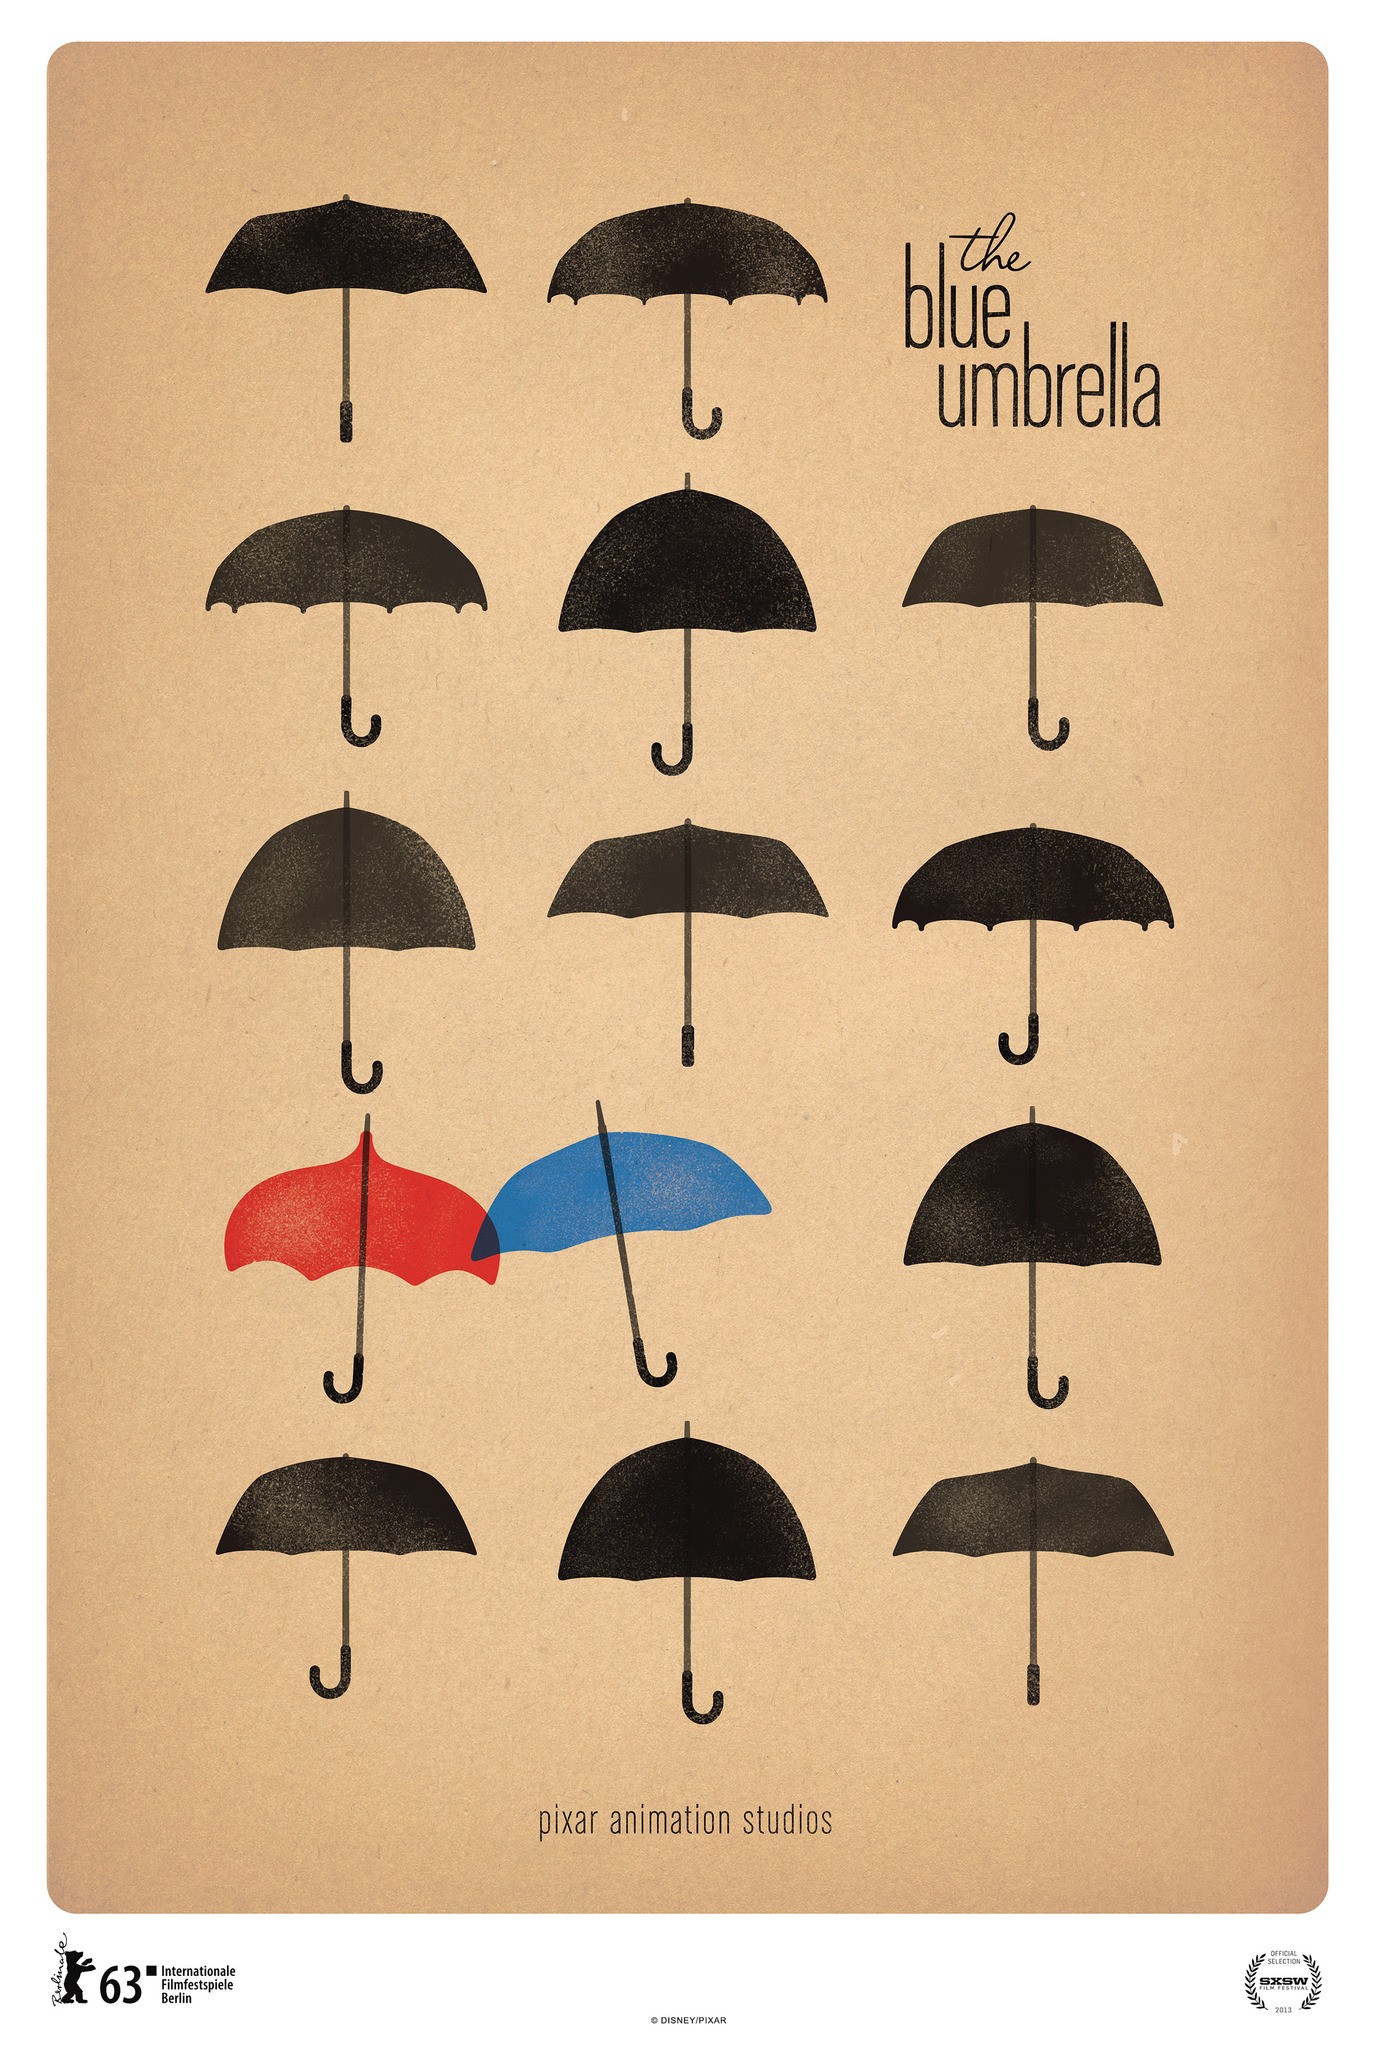 Mega Sized Movie Poster Image for The Blue Umbrella